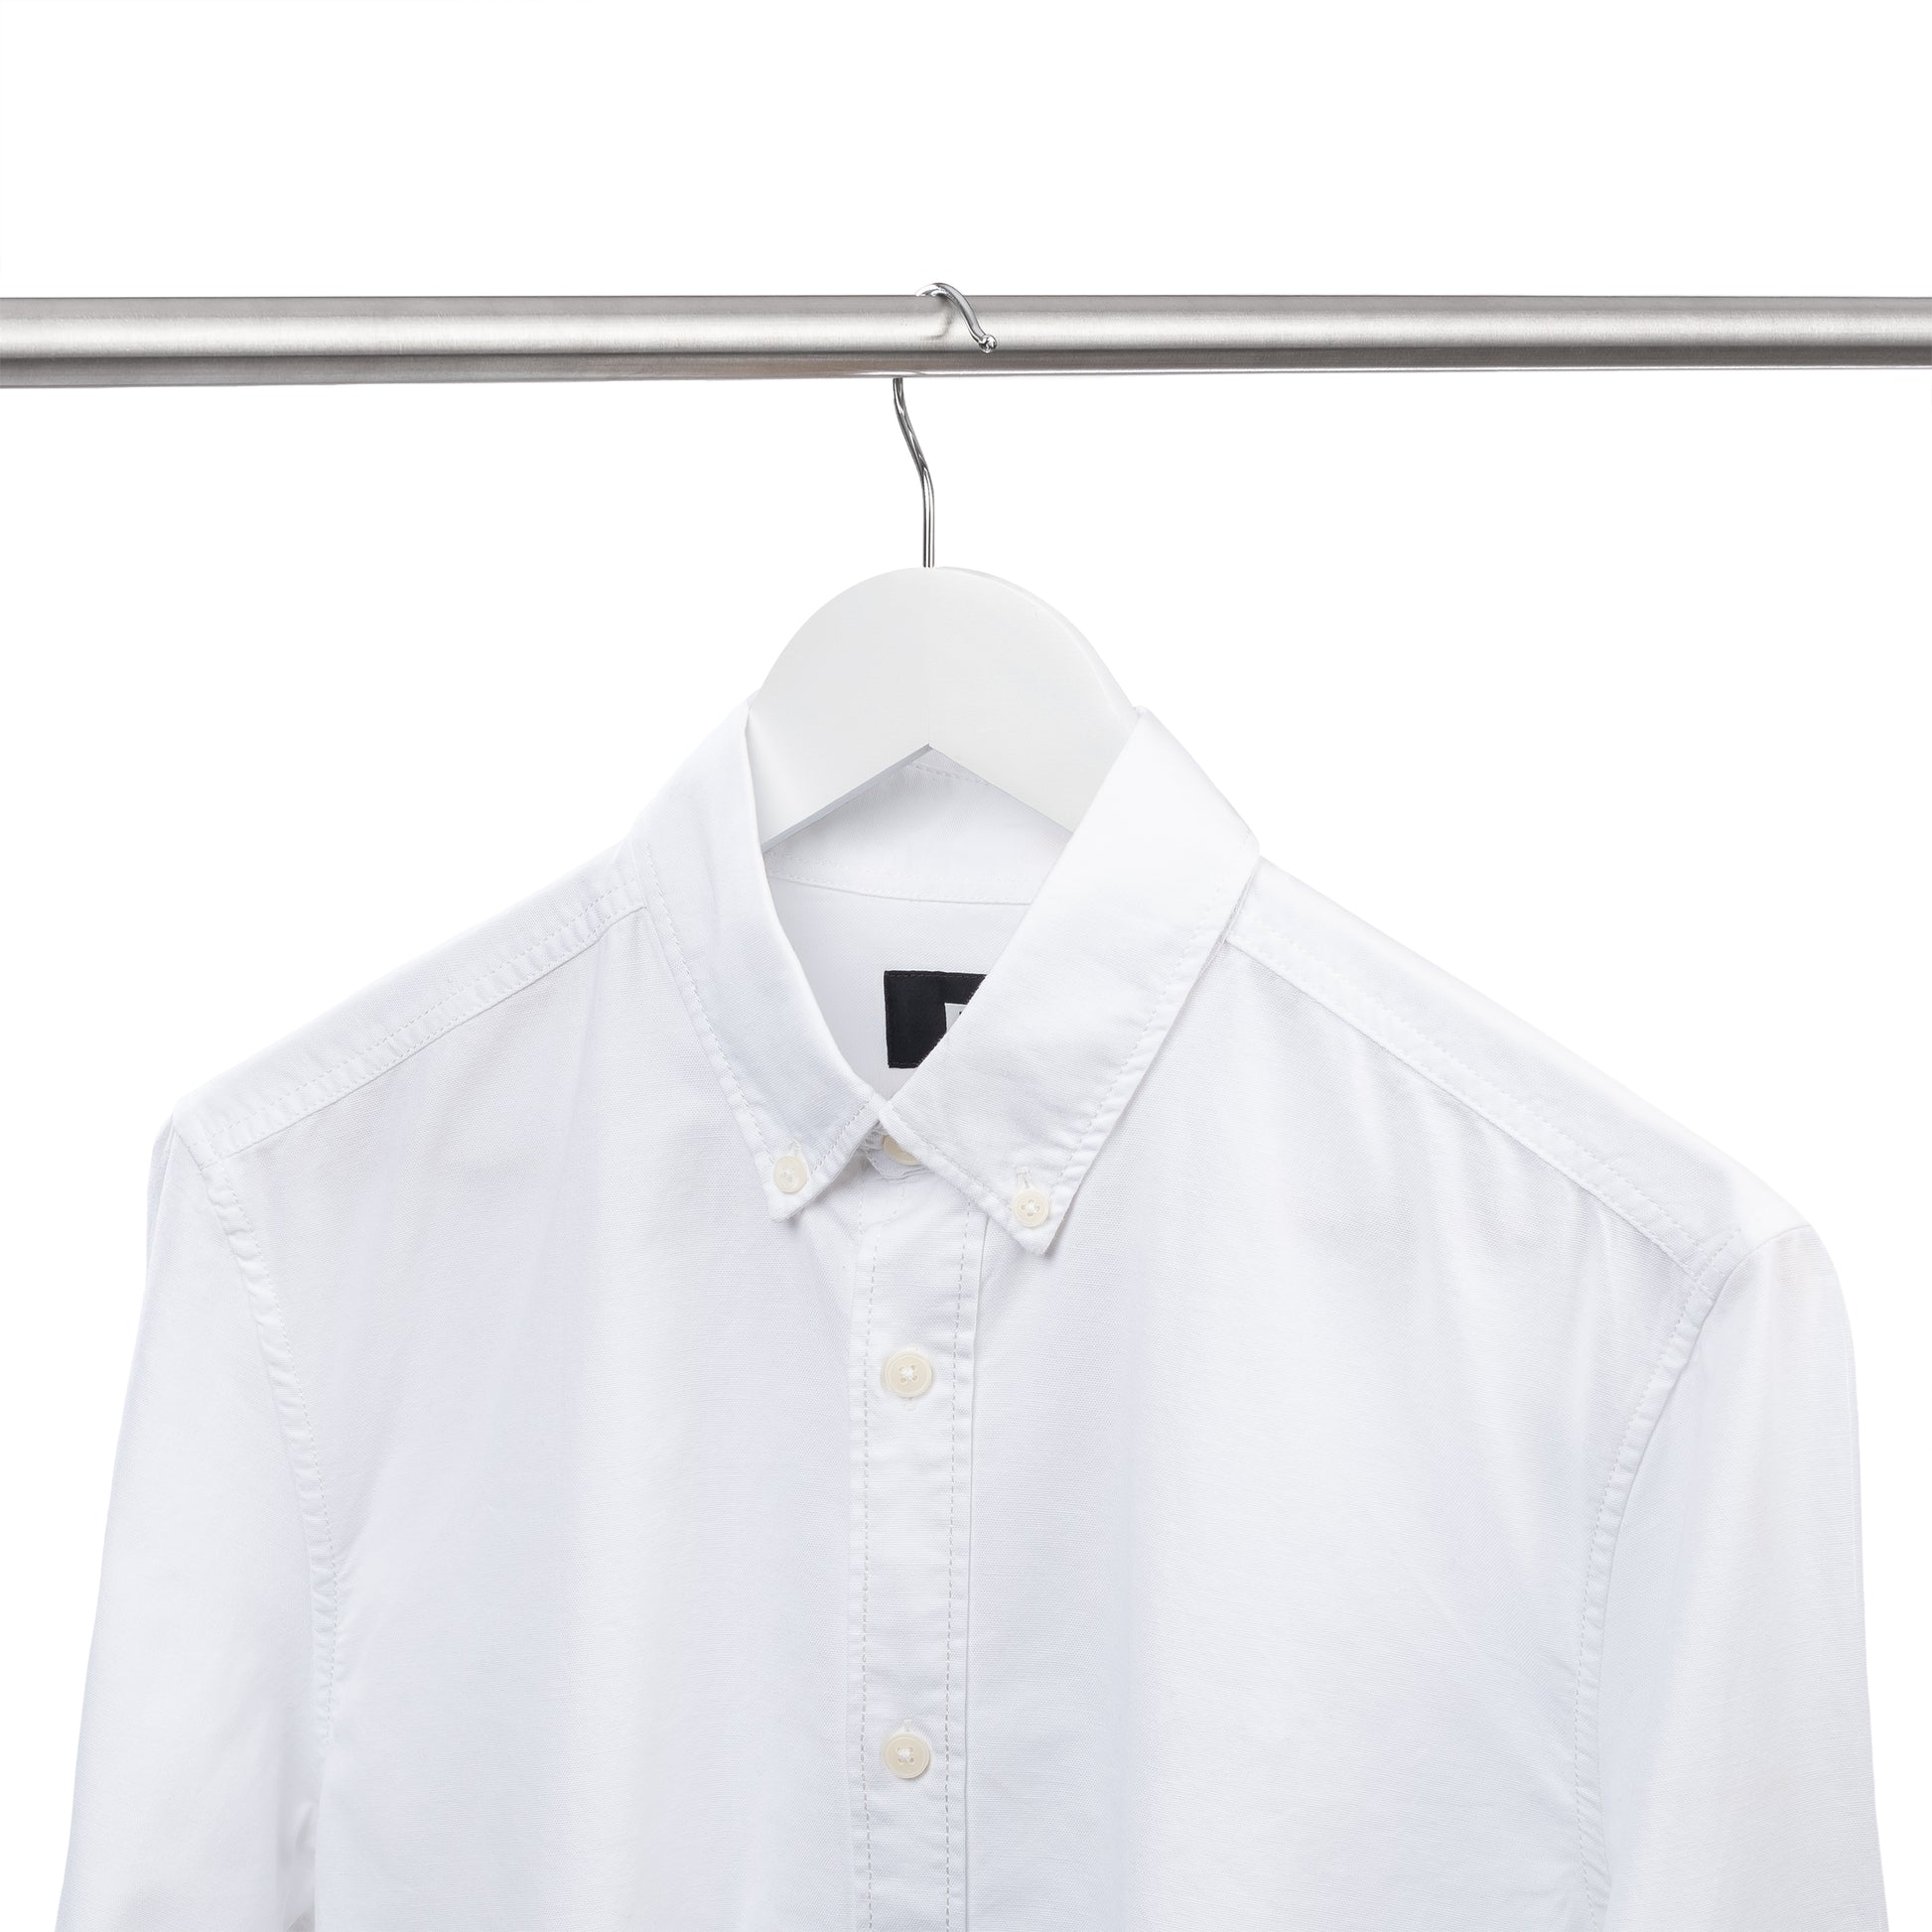 Hemd an weißen Kleiderbügel